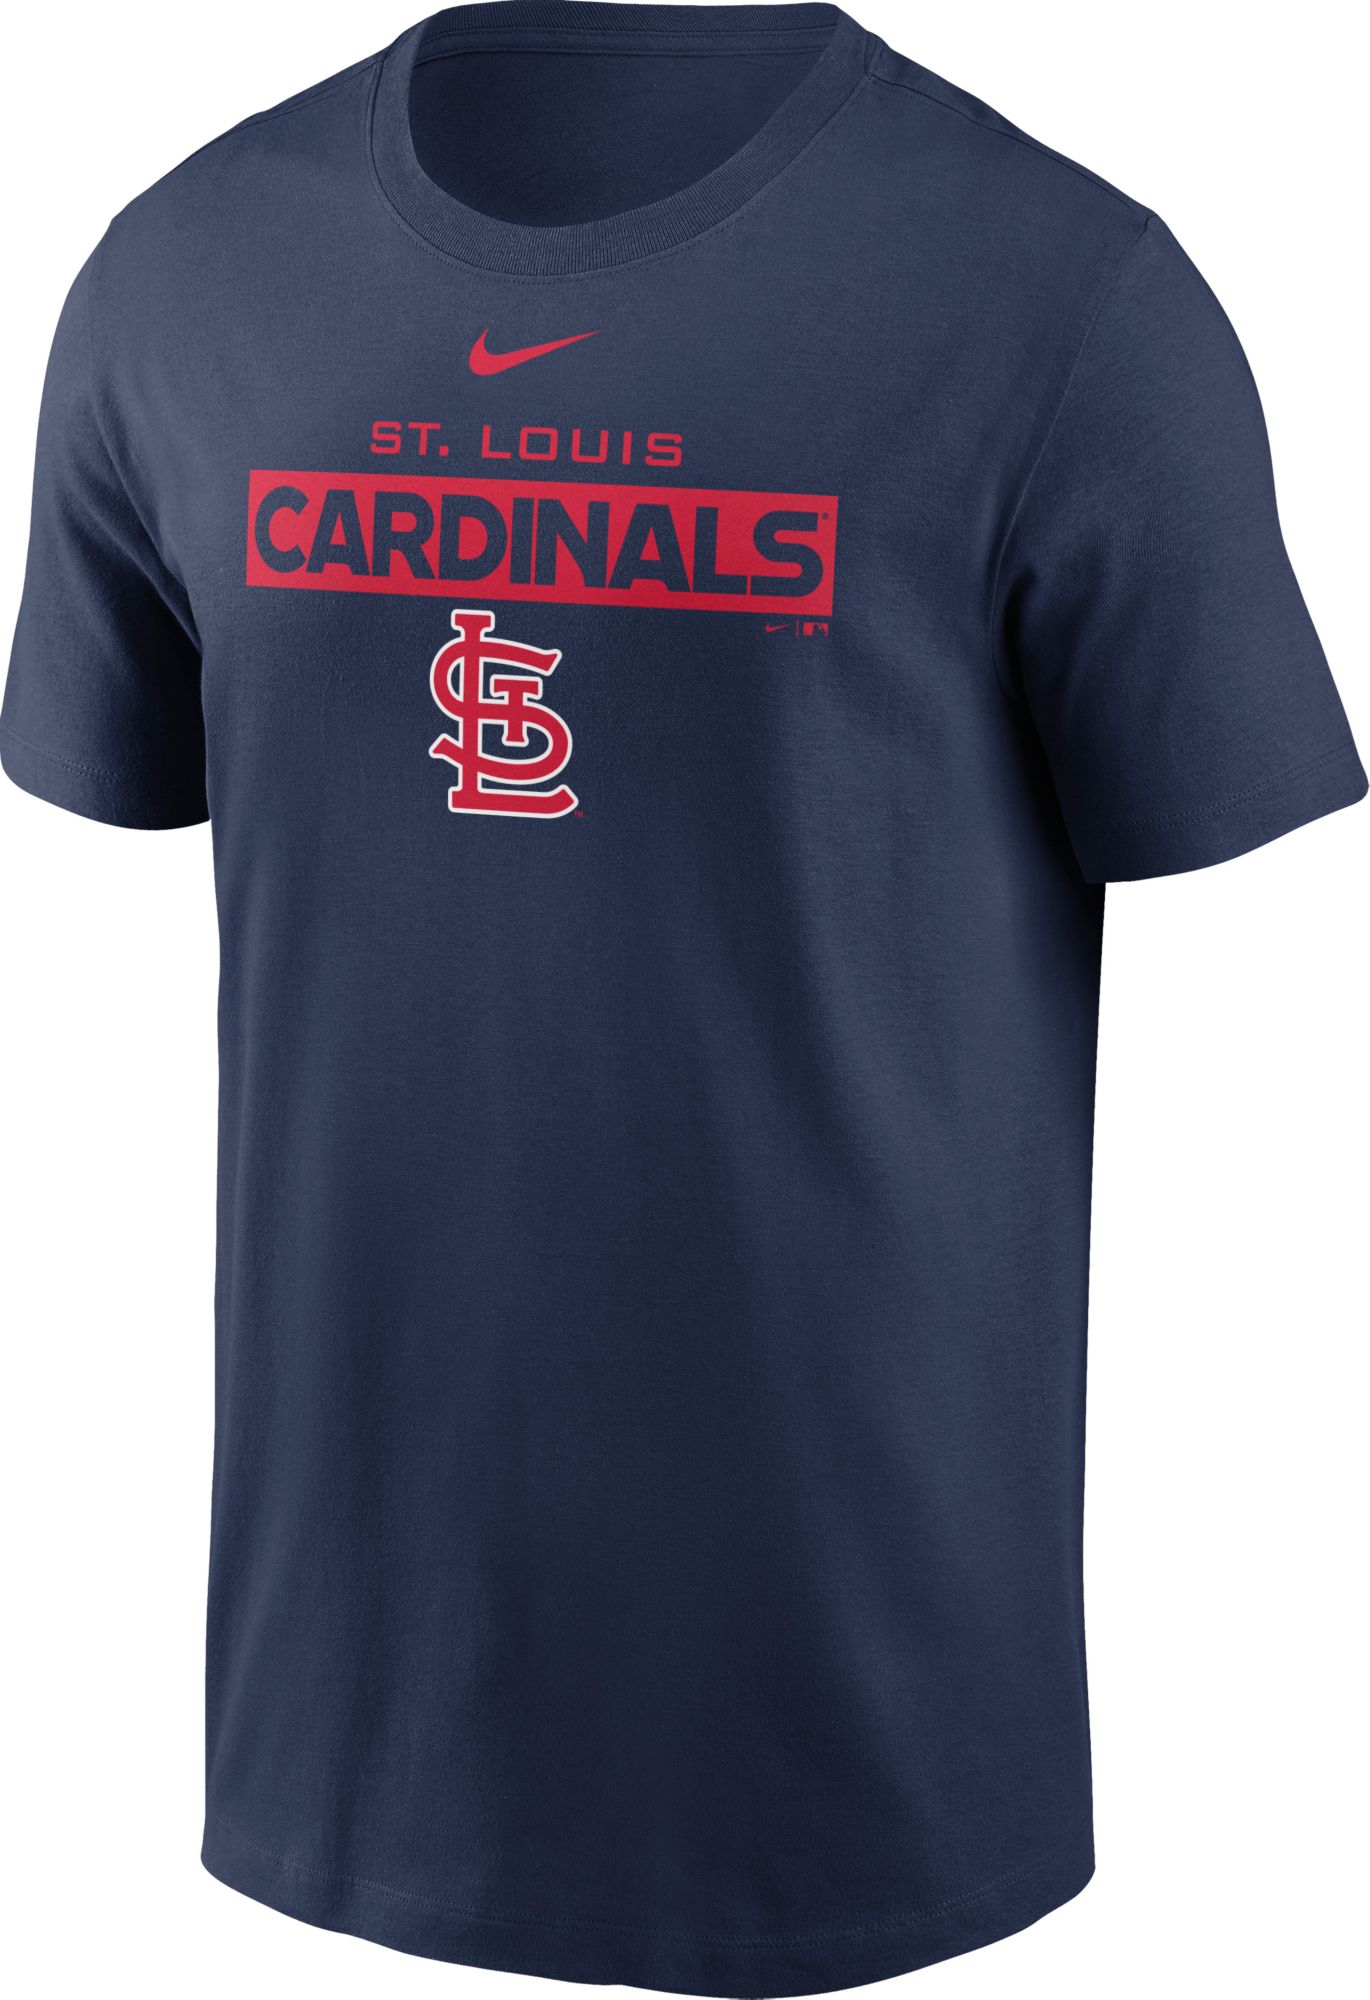 Nike / Men's St. Louis Cardinals Navy Cotton T-Shirt